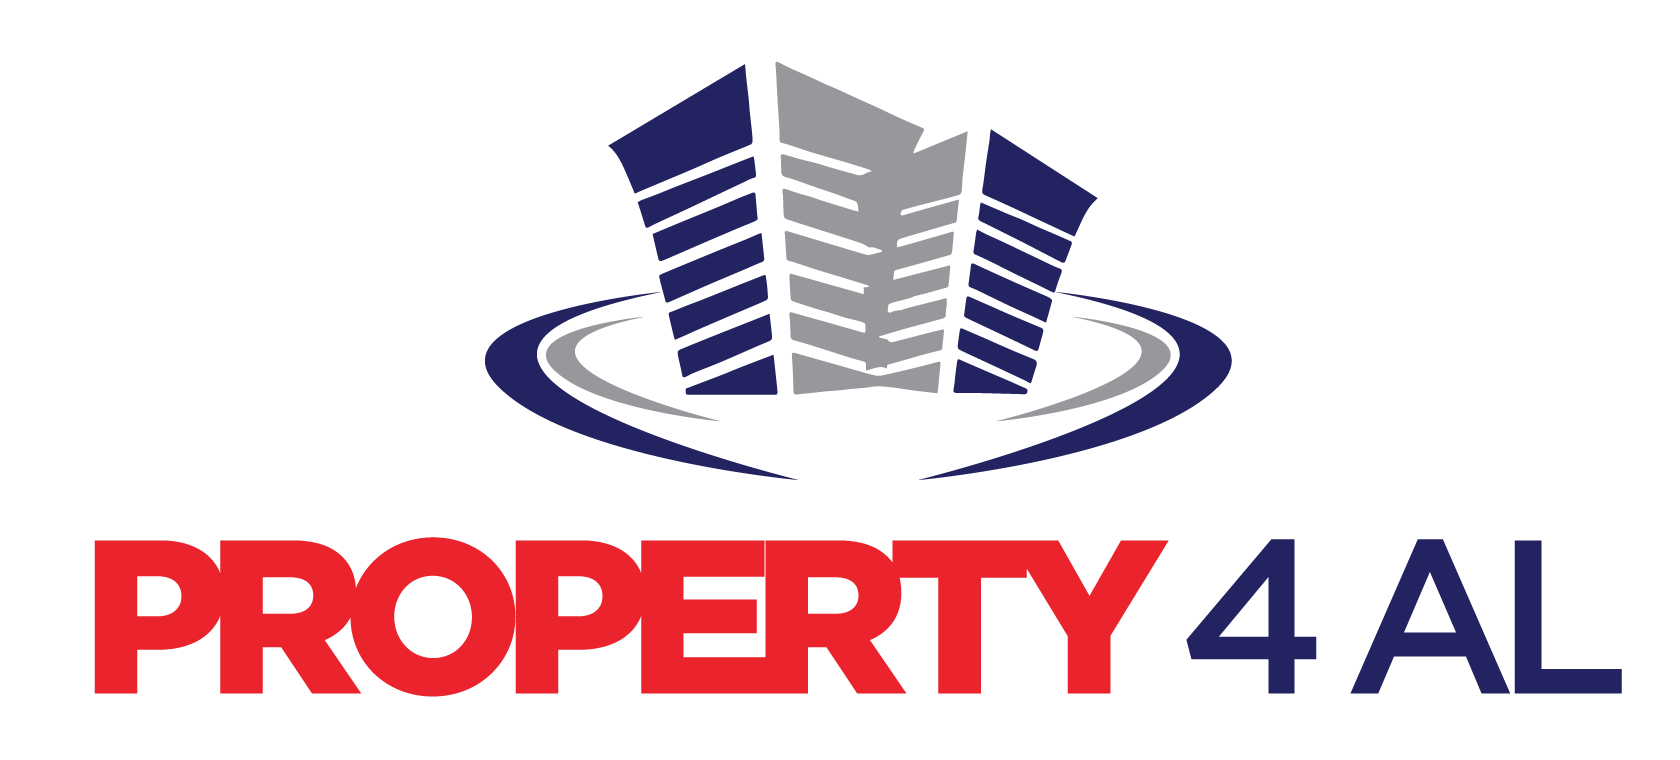 Property4al-Properties for everyone